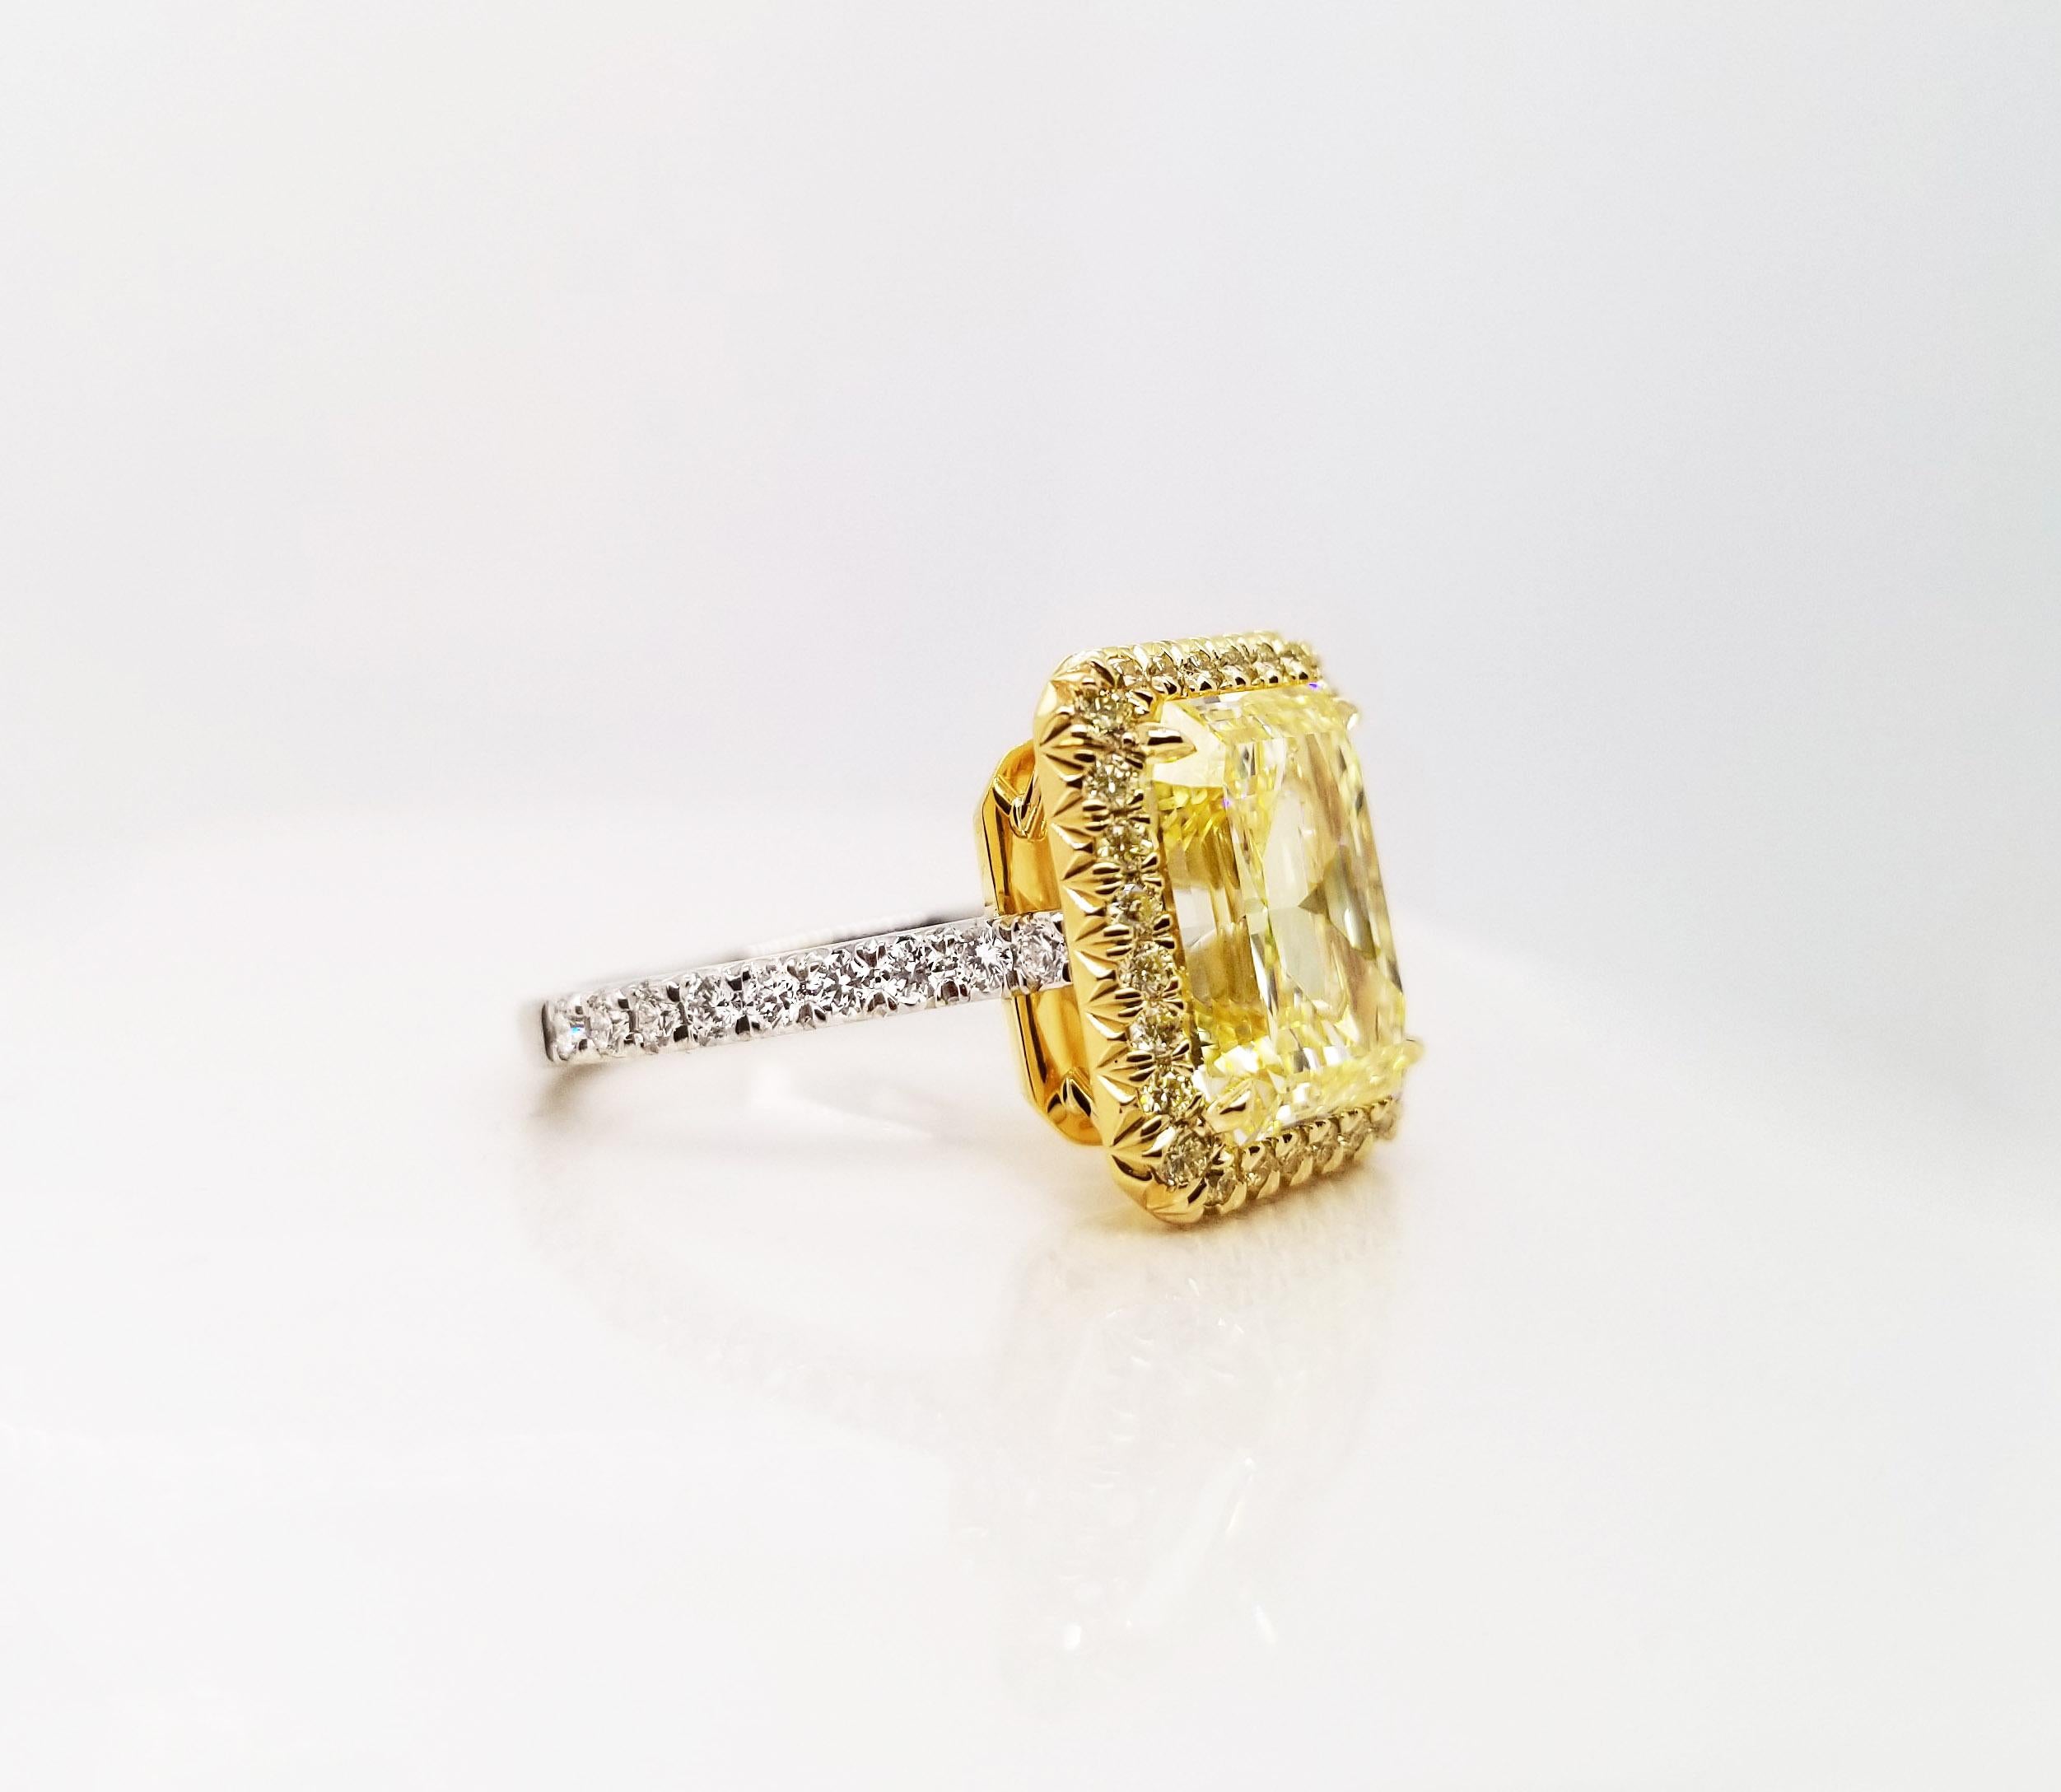 Scarselli 5 Carat Emerald Fancy Intense Yellow Diamond Engagement Ring GIA 1